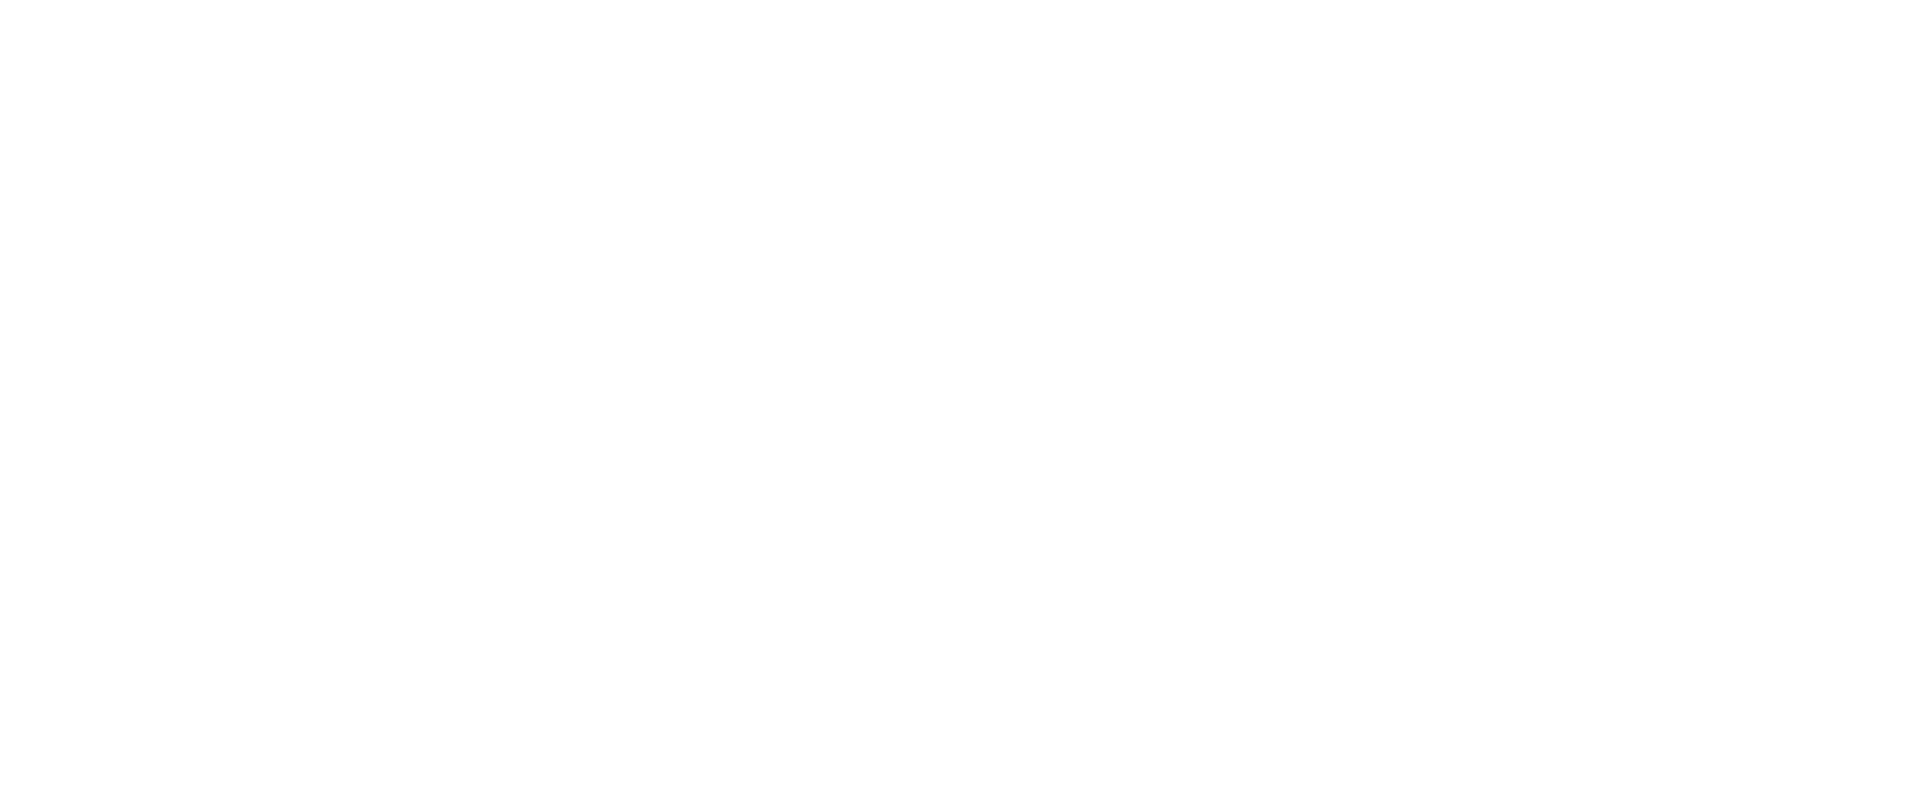 Lakeside Office suites white logo